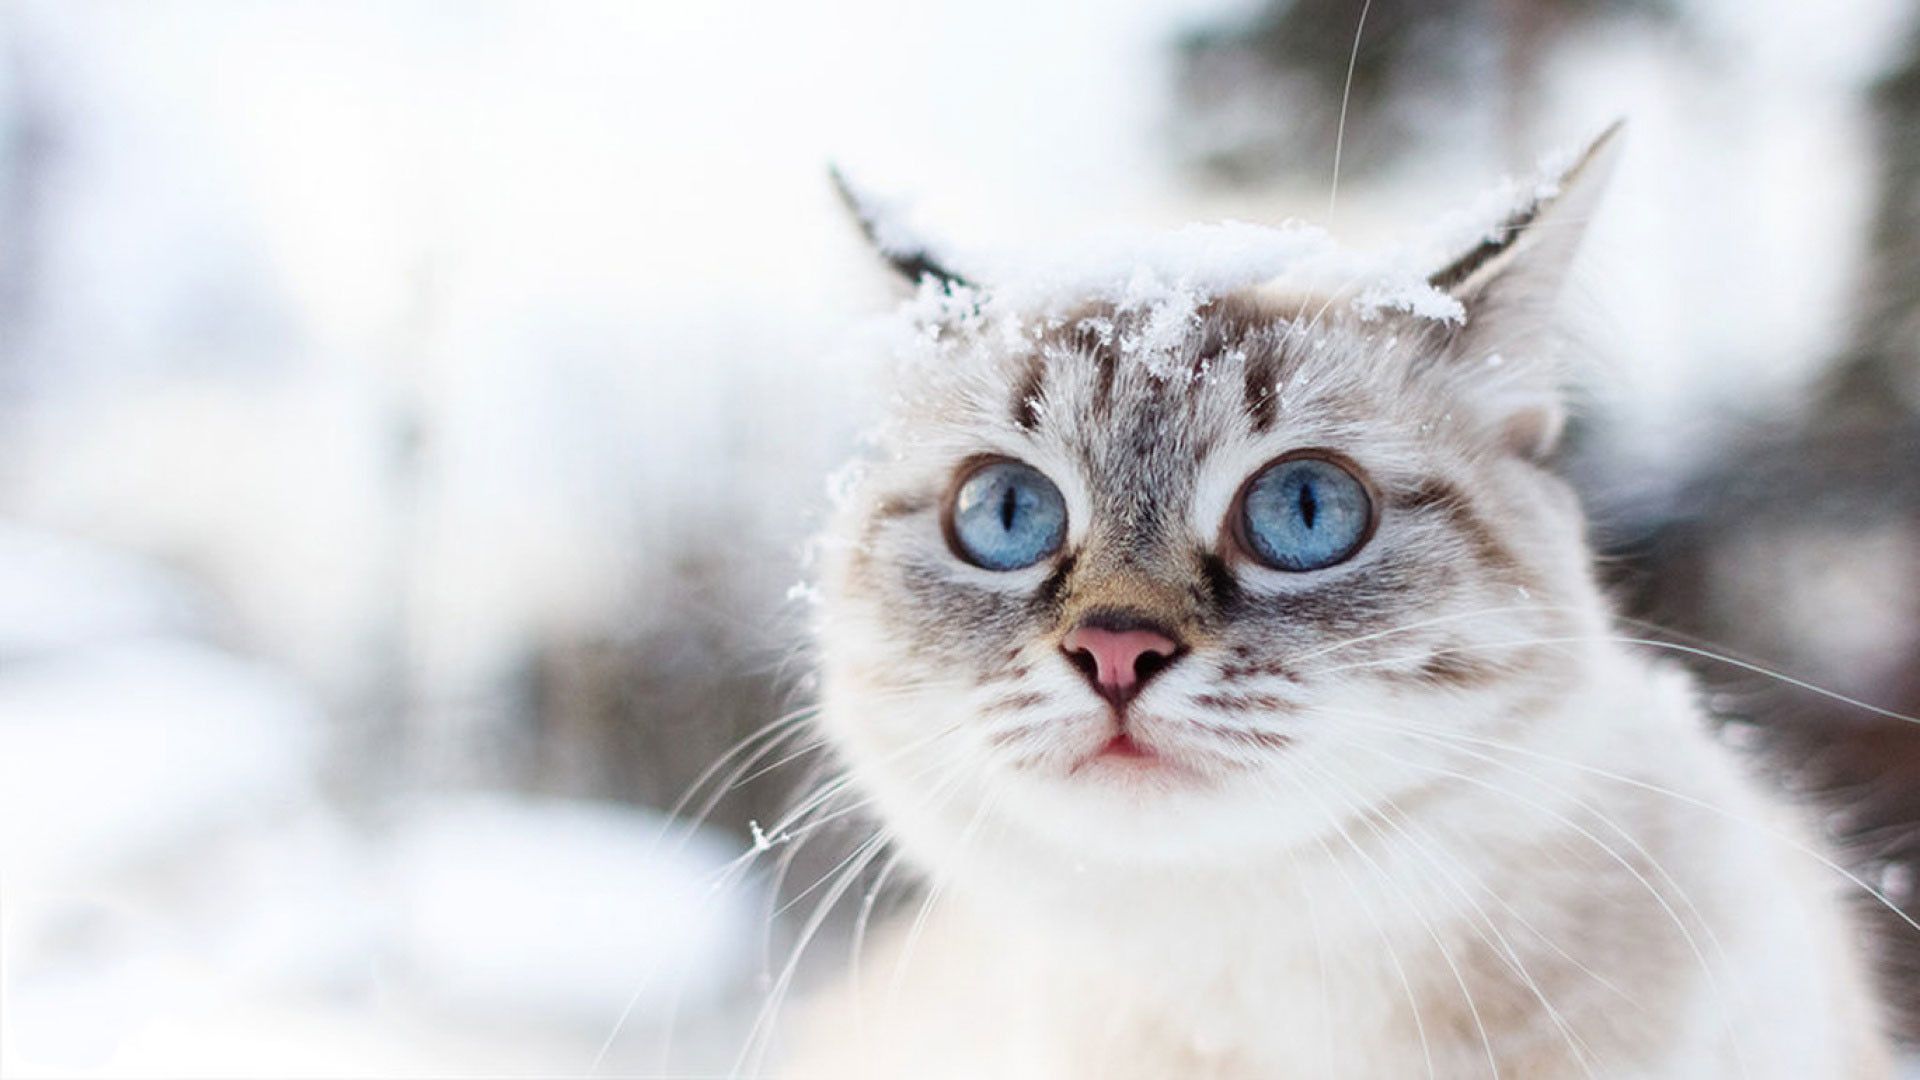 Hd pics photos attractive snow cat winter beautiful cute hd quality desktop background wallpaper